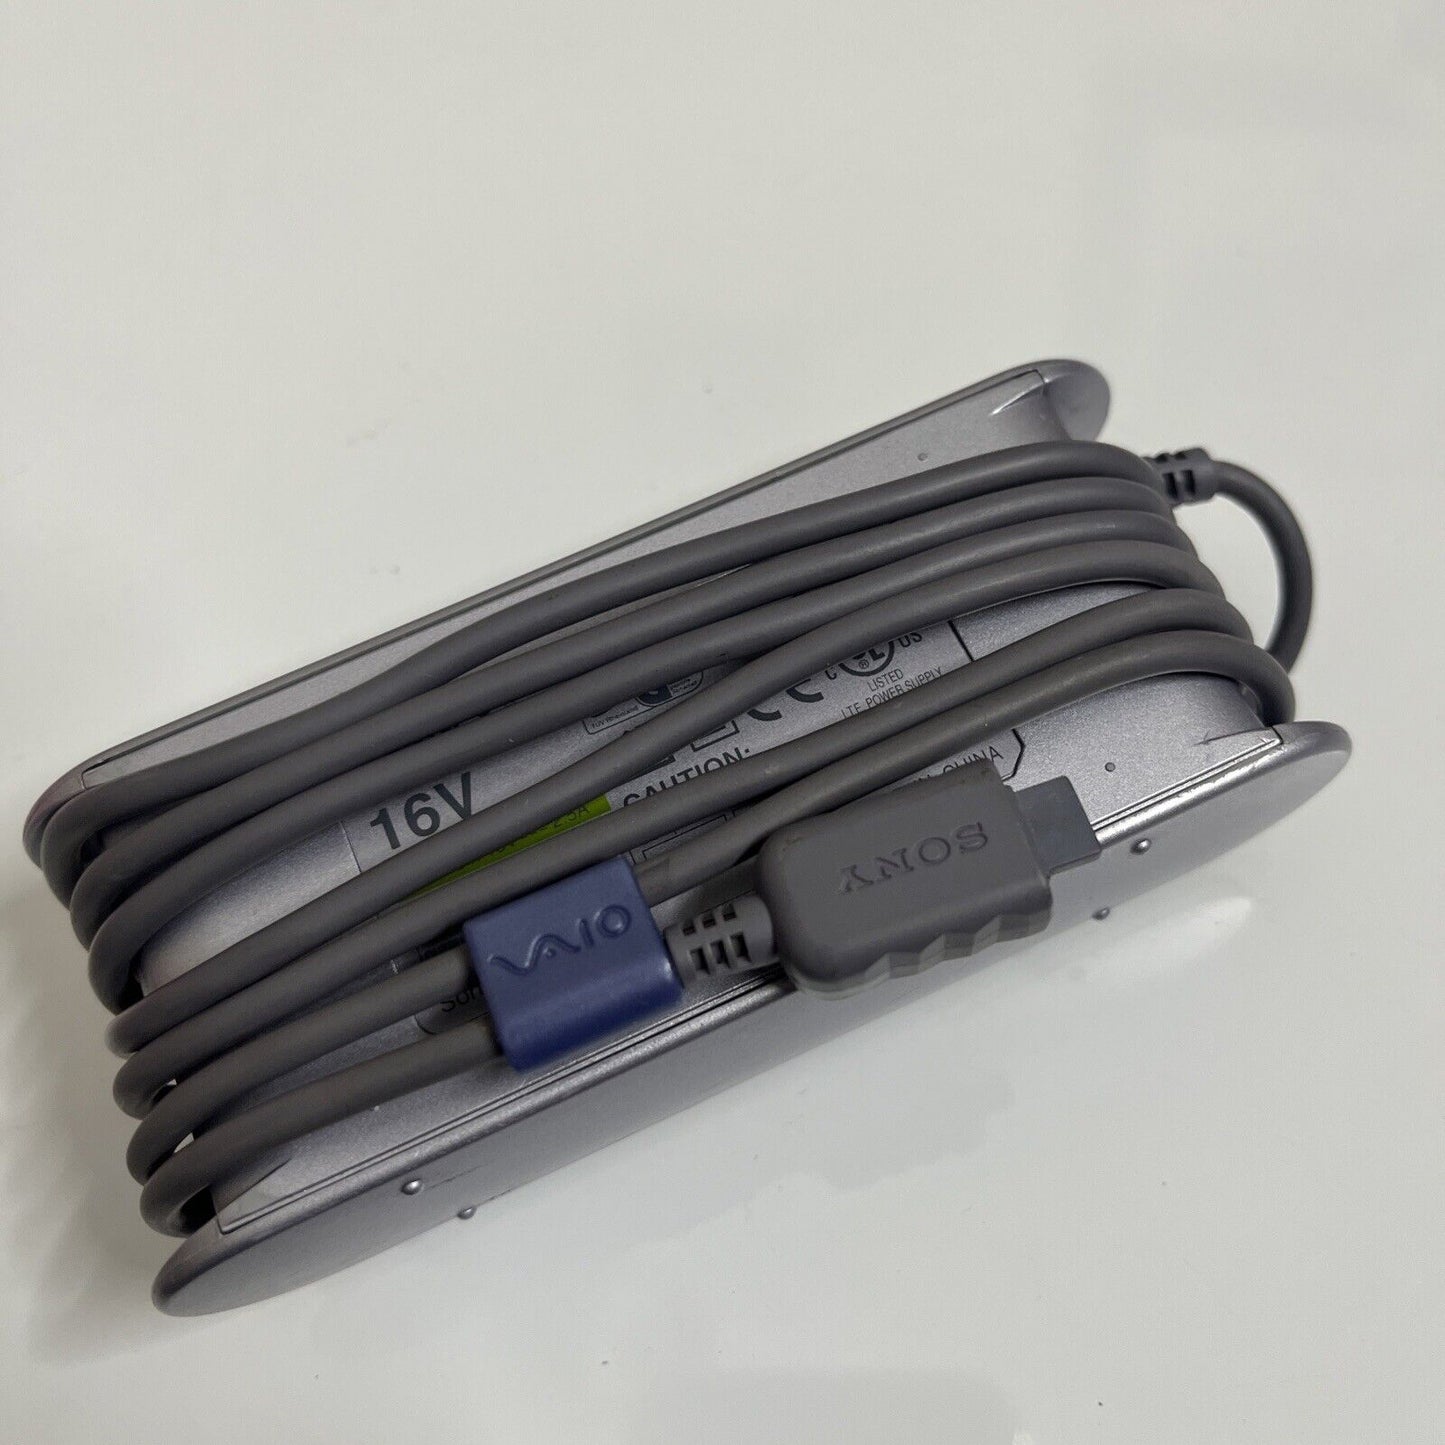 Sony VAIO Power Supply PCGA-AC5N AC Adapter 16V For VAIO Notebook